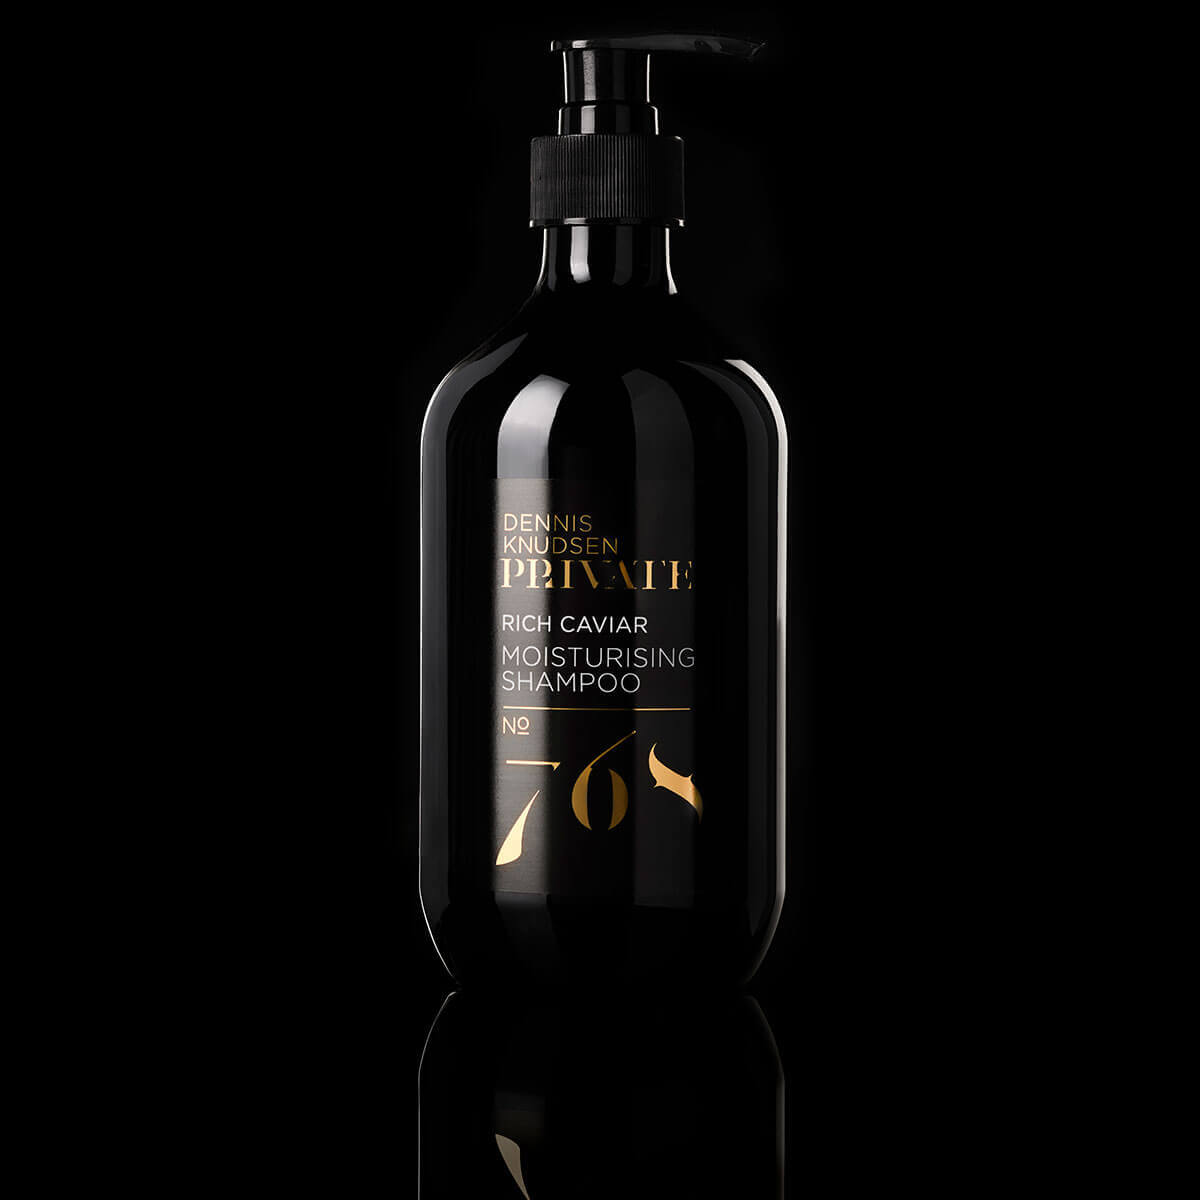 rich caviar moisturising shampoo 768 dennis knudsen private